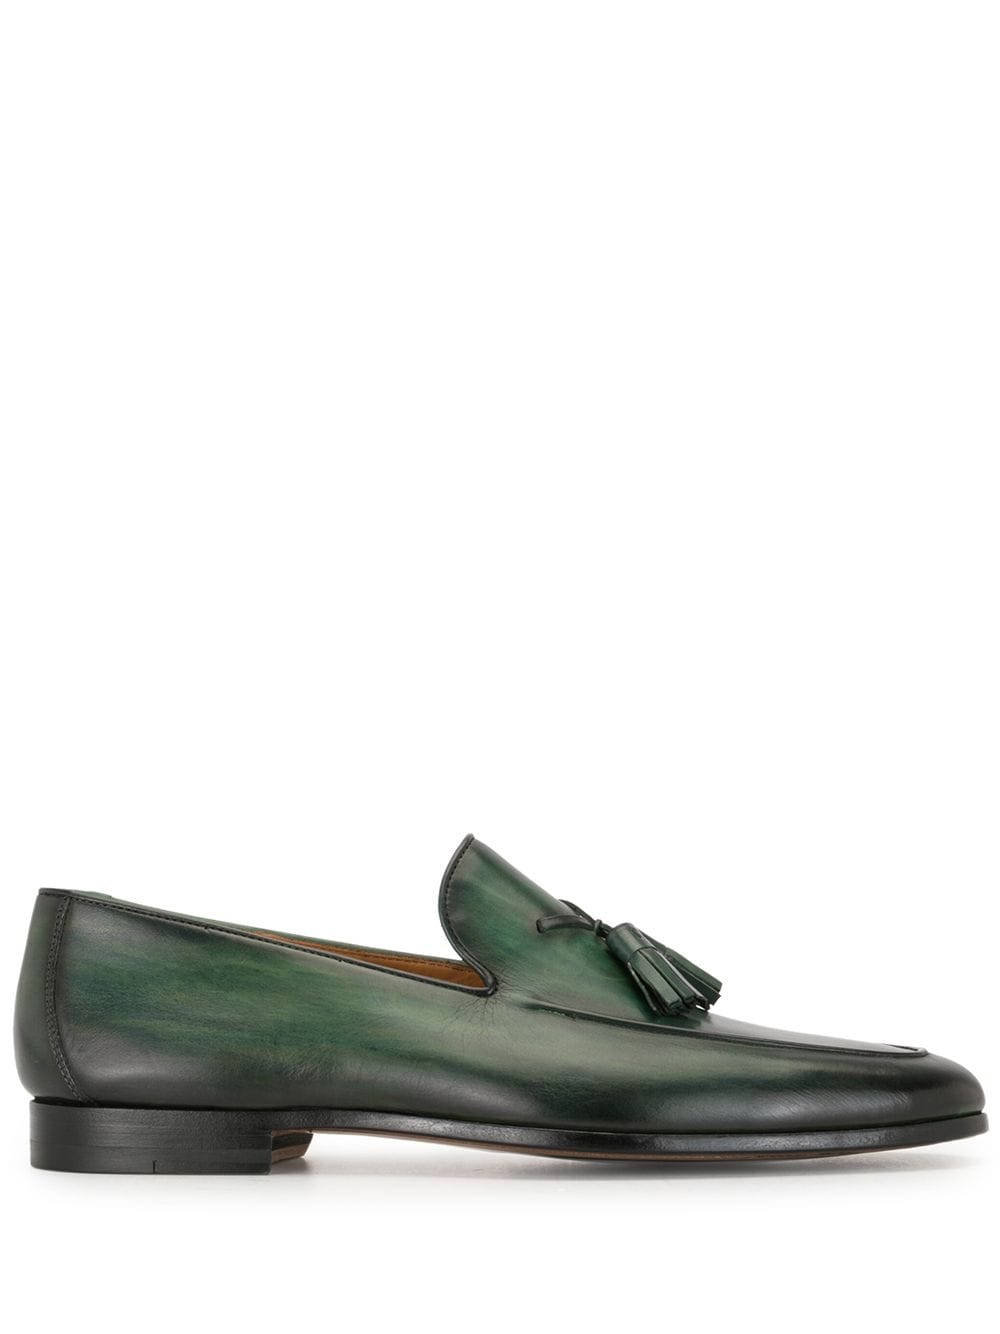 Magnanni tasseled leather loafers - Green von Magnanni